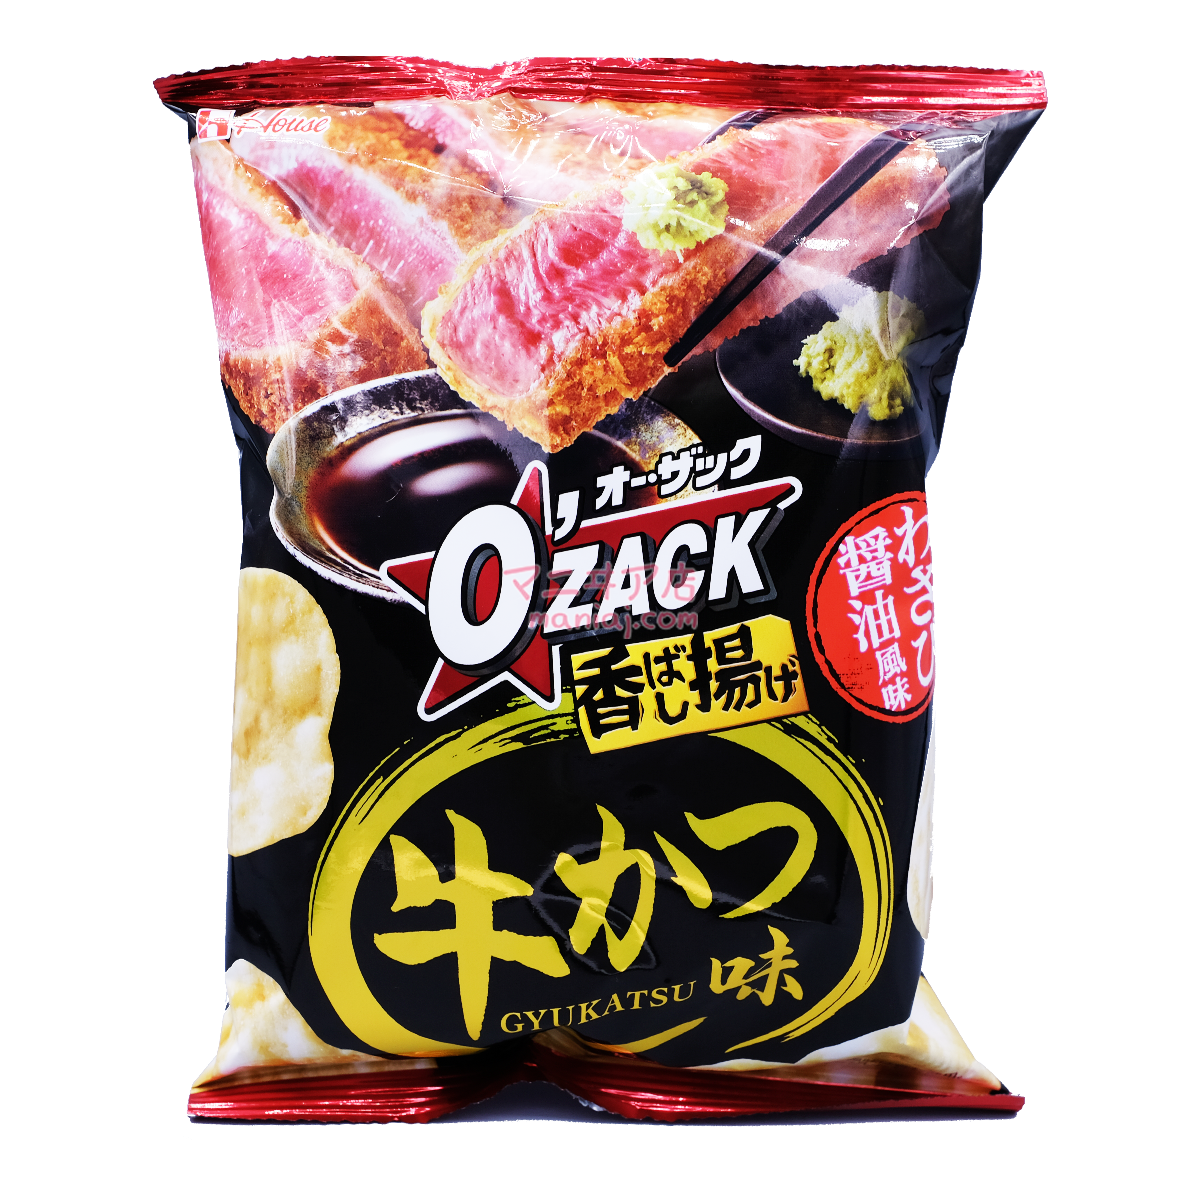 OZACK Gillette Beef Flavor Potato Chips